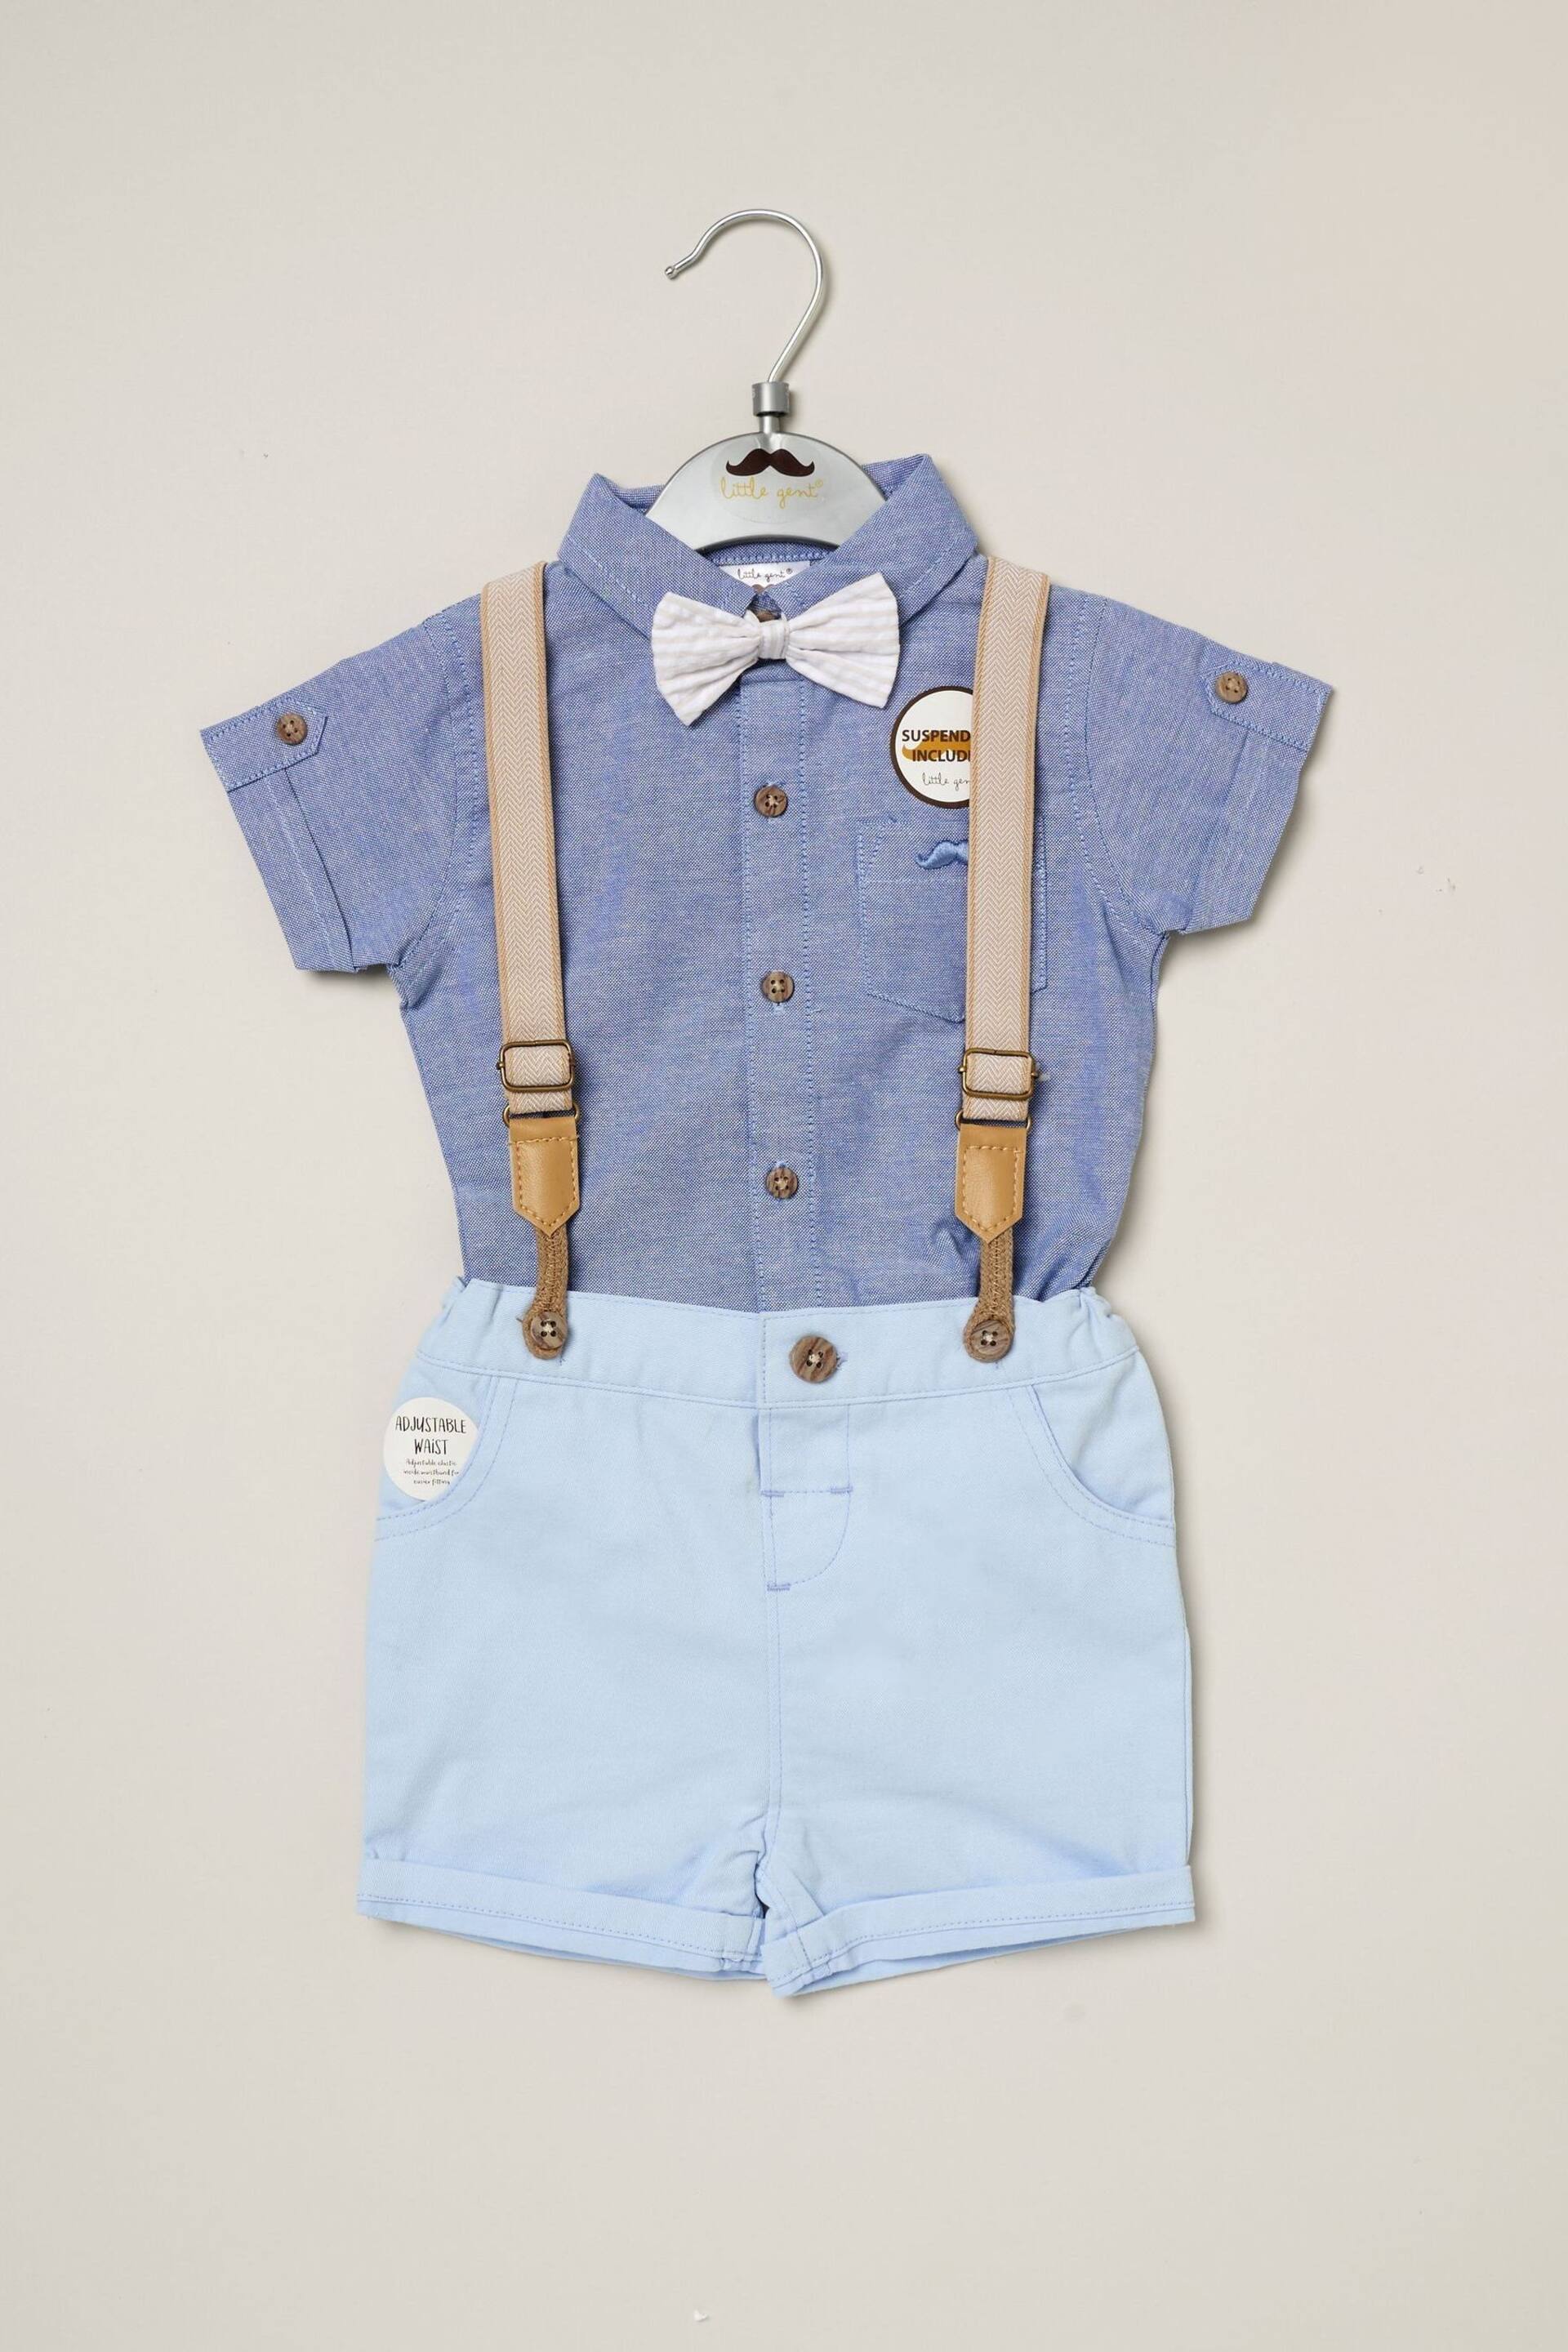 Little Gent Blue Shirt Bodysuit Bowtie Shirt and Short Set - Image 2 of 4